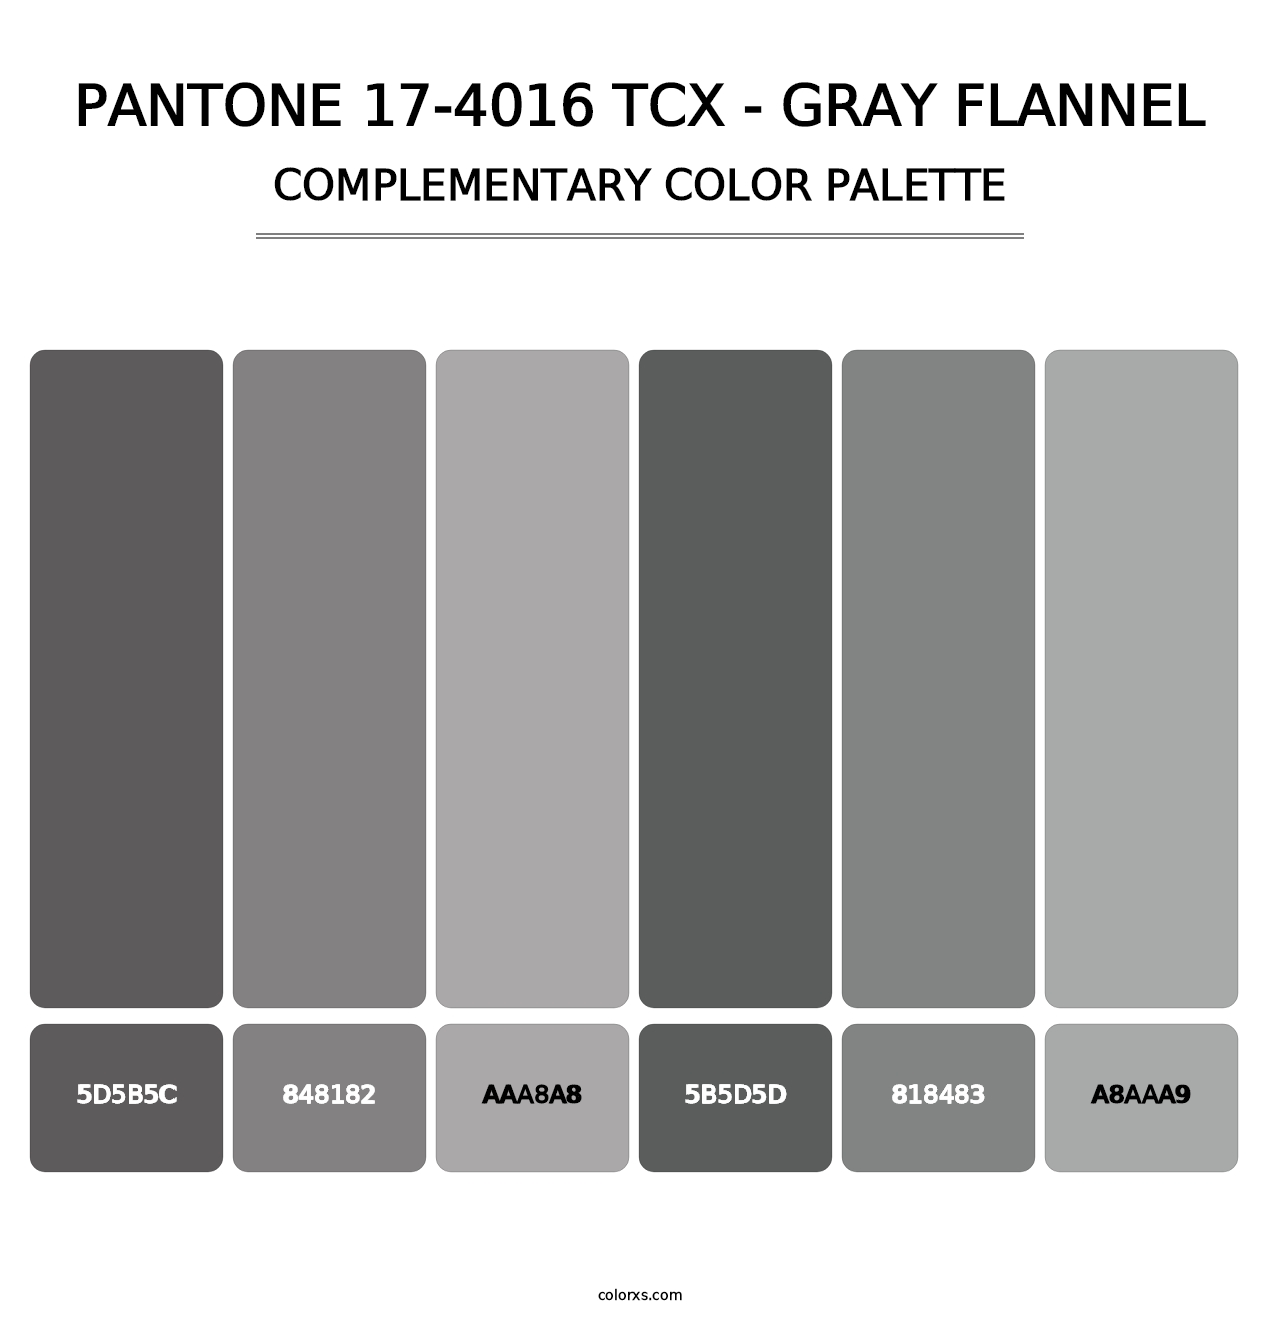 PANTONE 17-4016 TCX - Gray Flannel - Complementary Color Palette